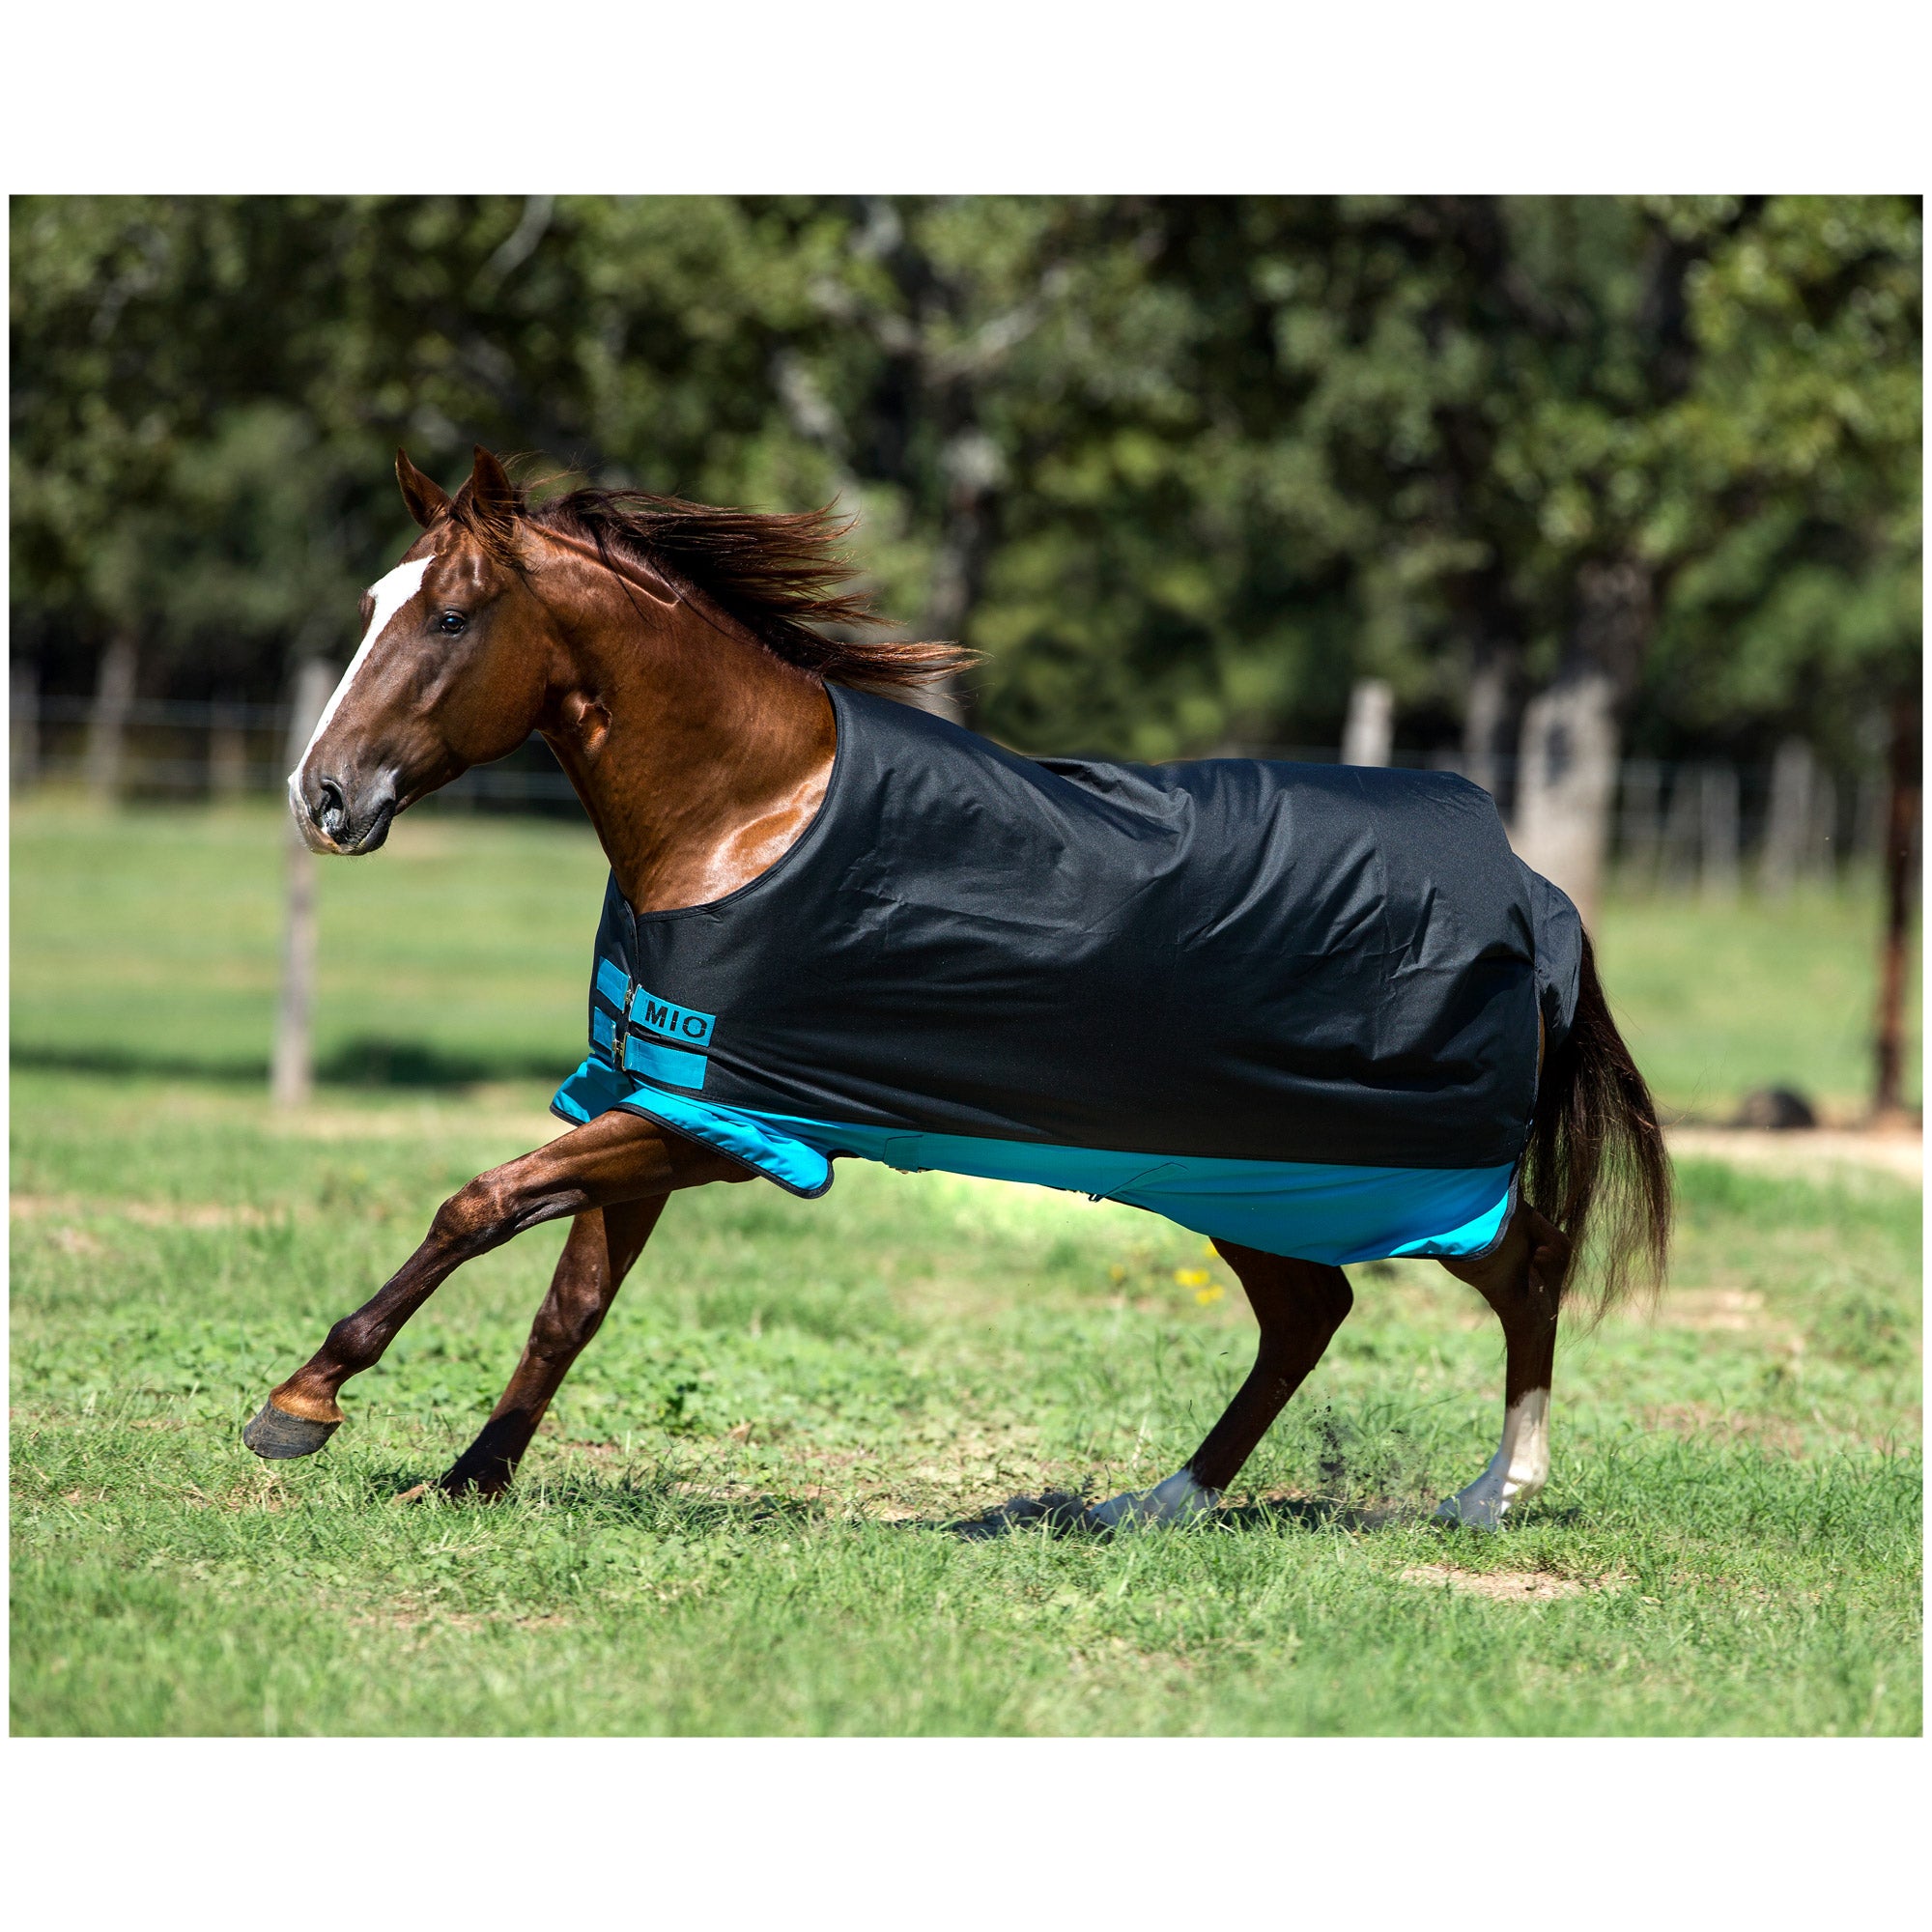 Hoseware Mio Lite,Lightweight Horse Rug,Black/Turquoise,60